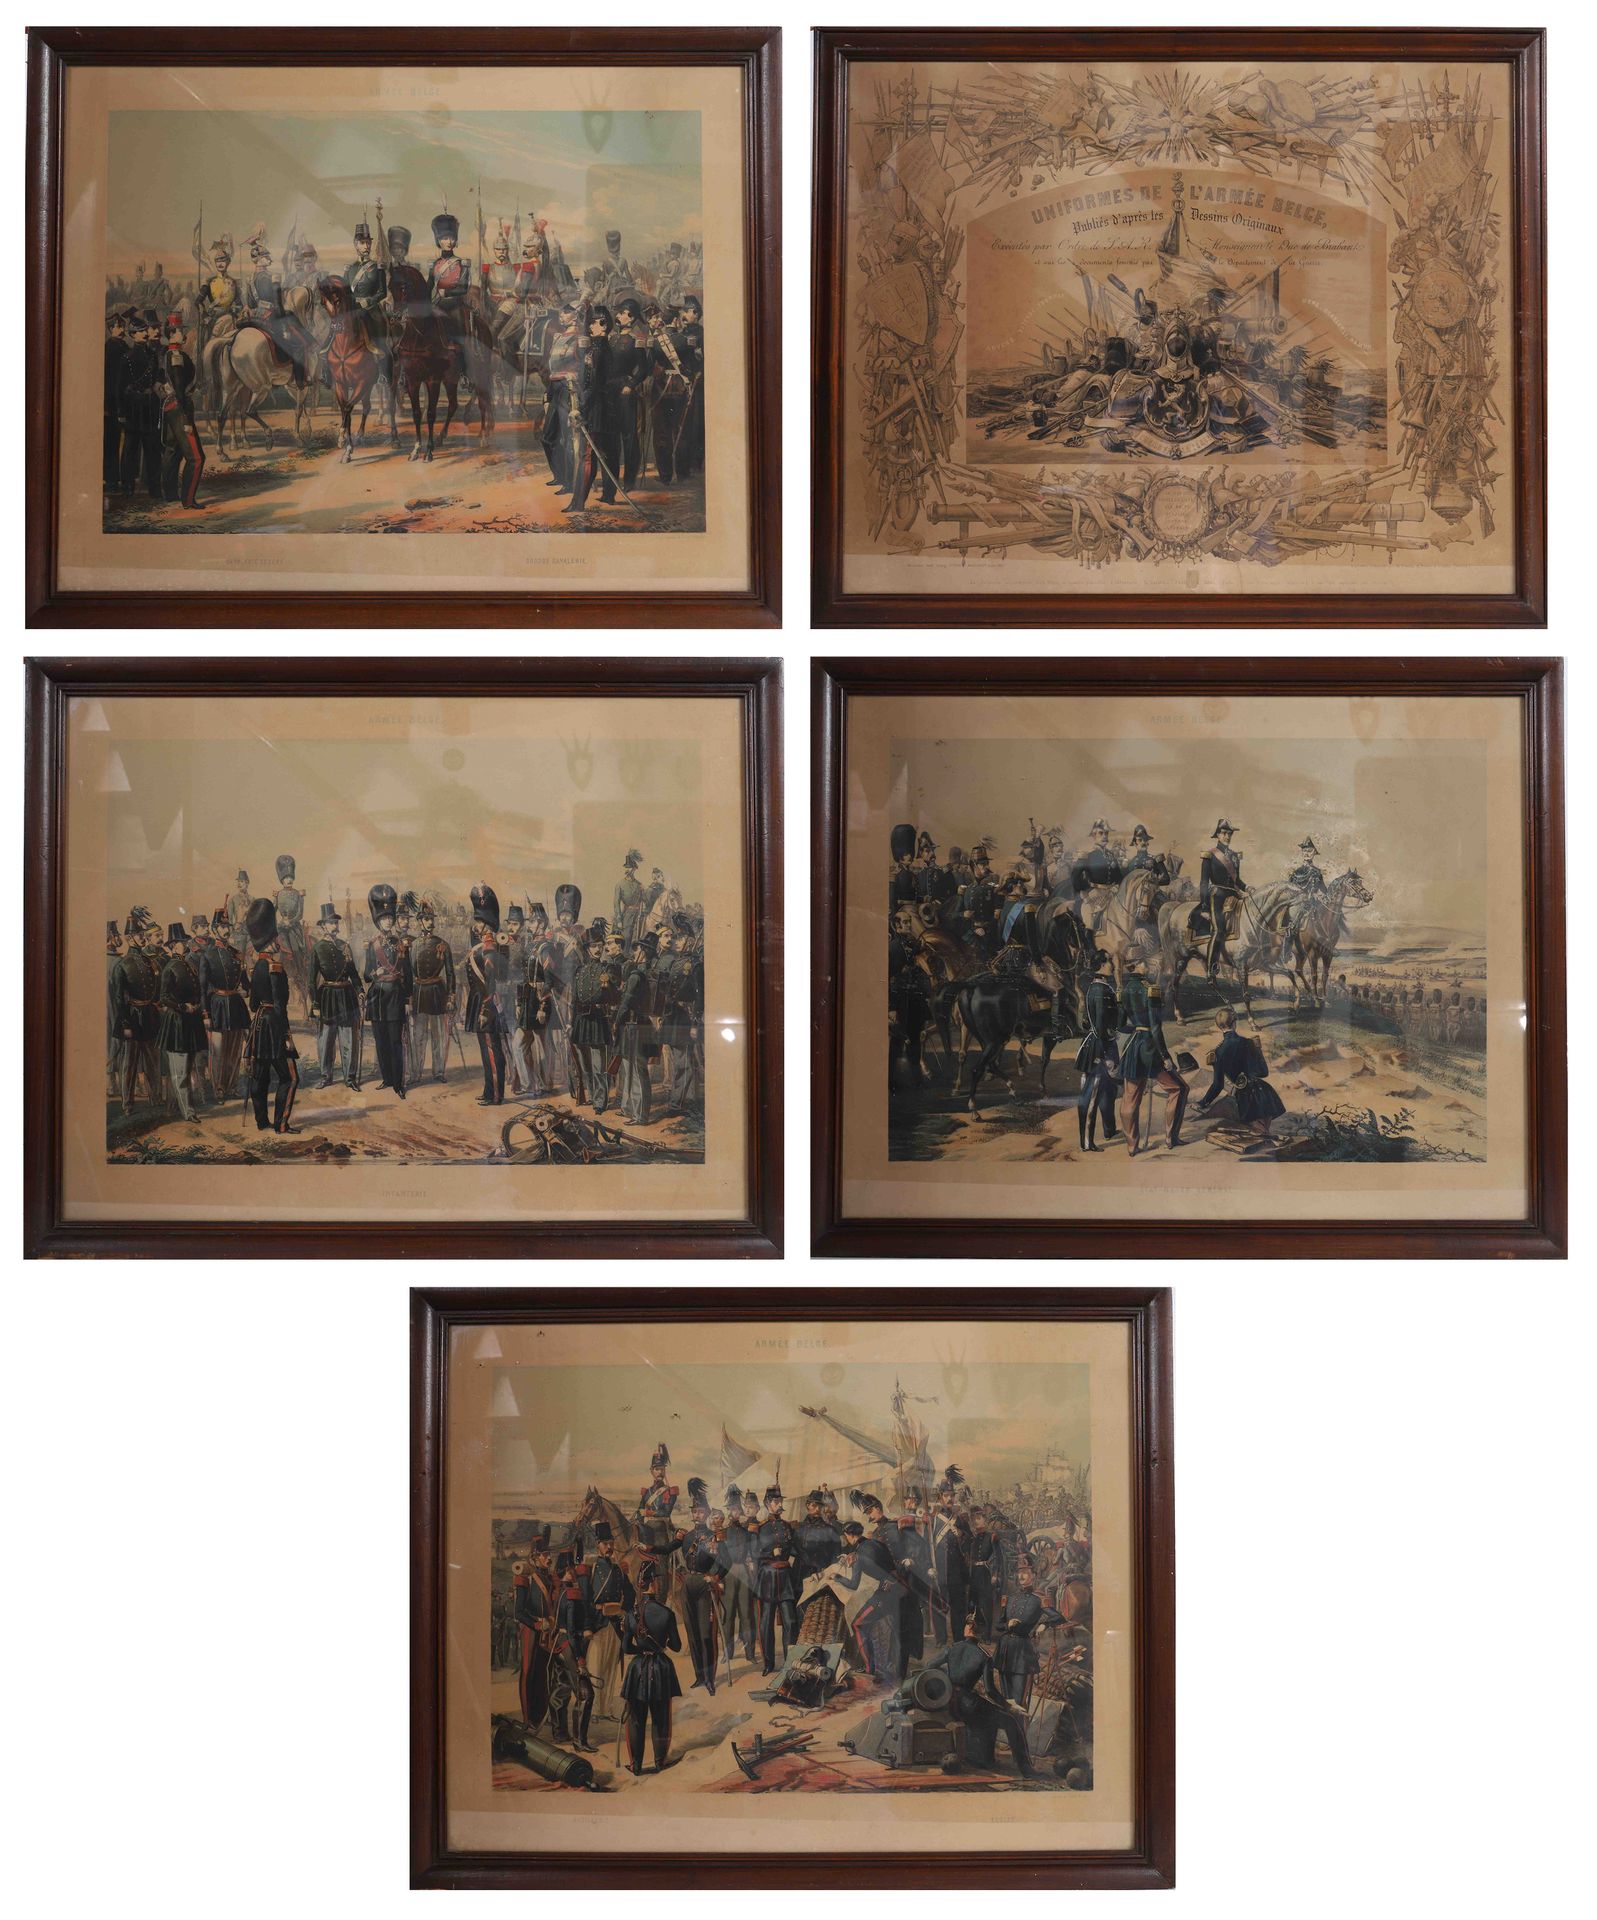 Null HENDRICKS (1817-1899)

Ensemble de 5 lithographies, armée belge vers 1880

&hellip;